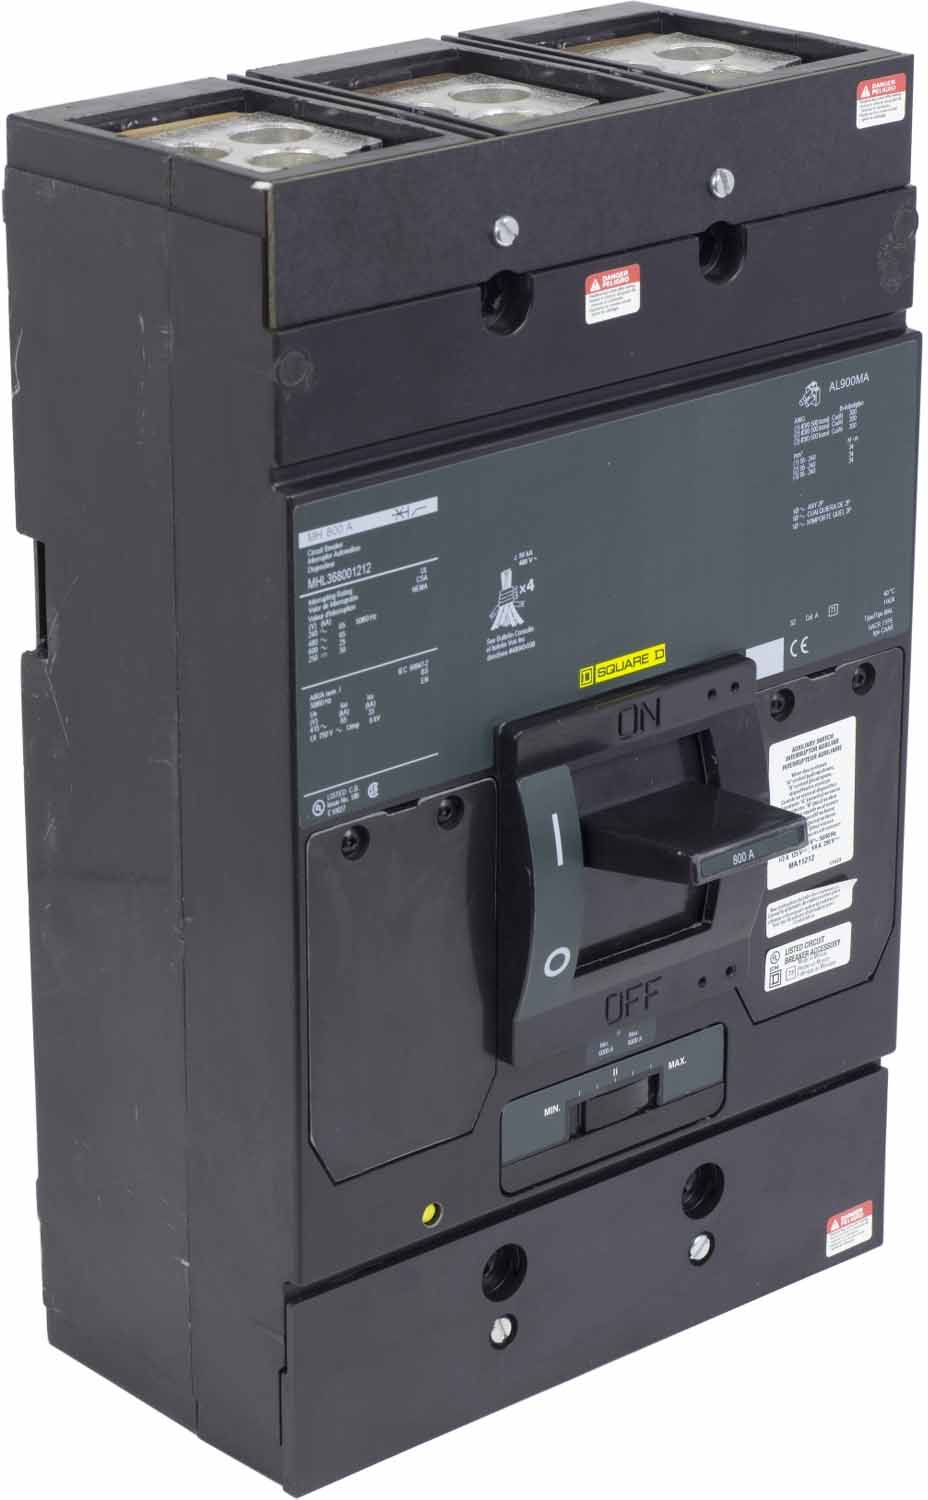 MHL368001212 - Square D 800 Amp 3 Pole 600 Volt Molded Case Circuit Breaker